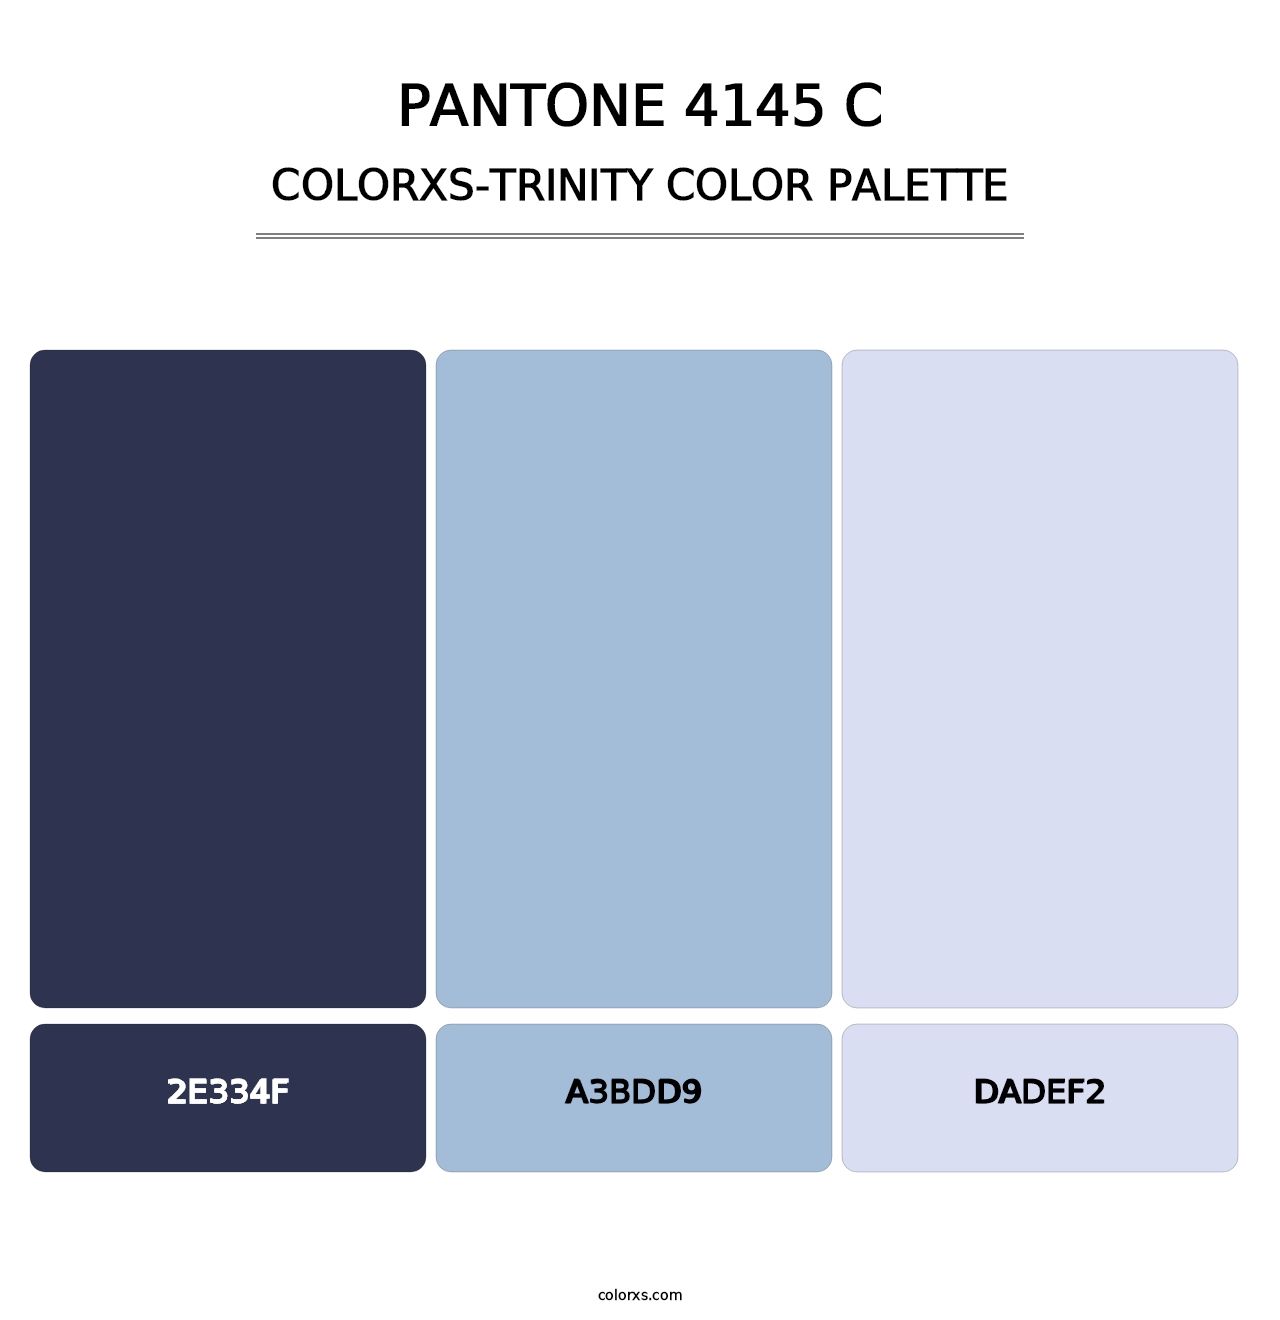 PANTONE 4145 C - Colorxs Trinity Palette